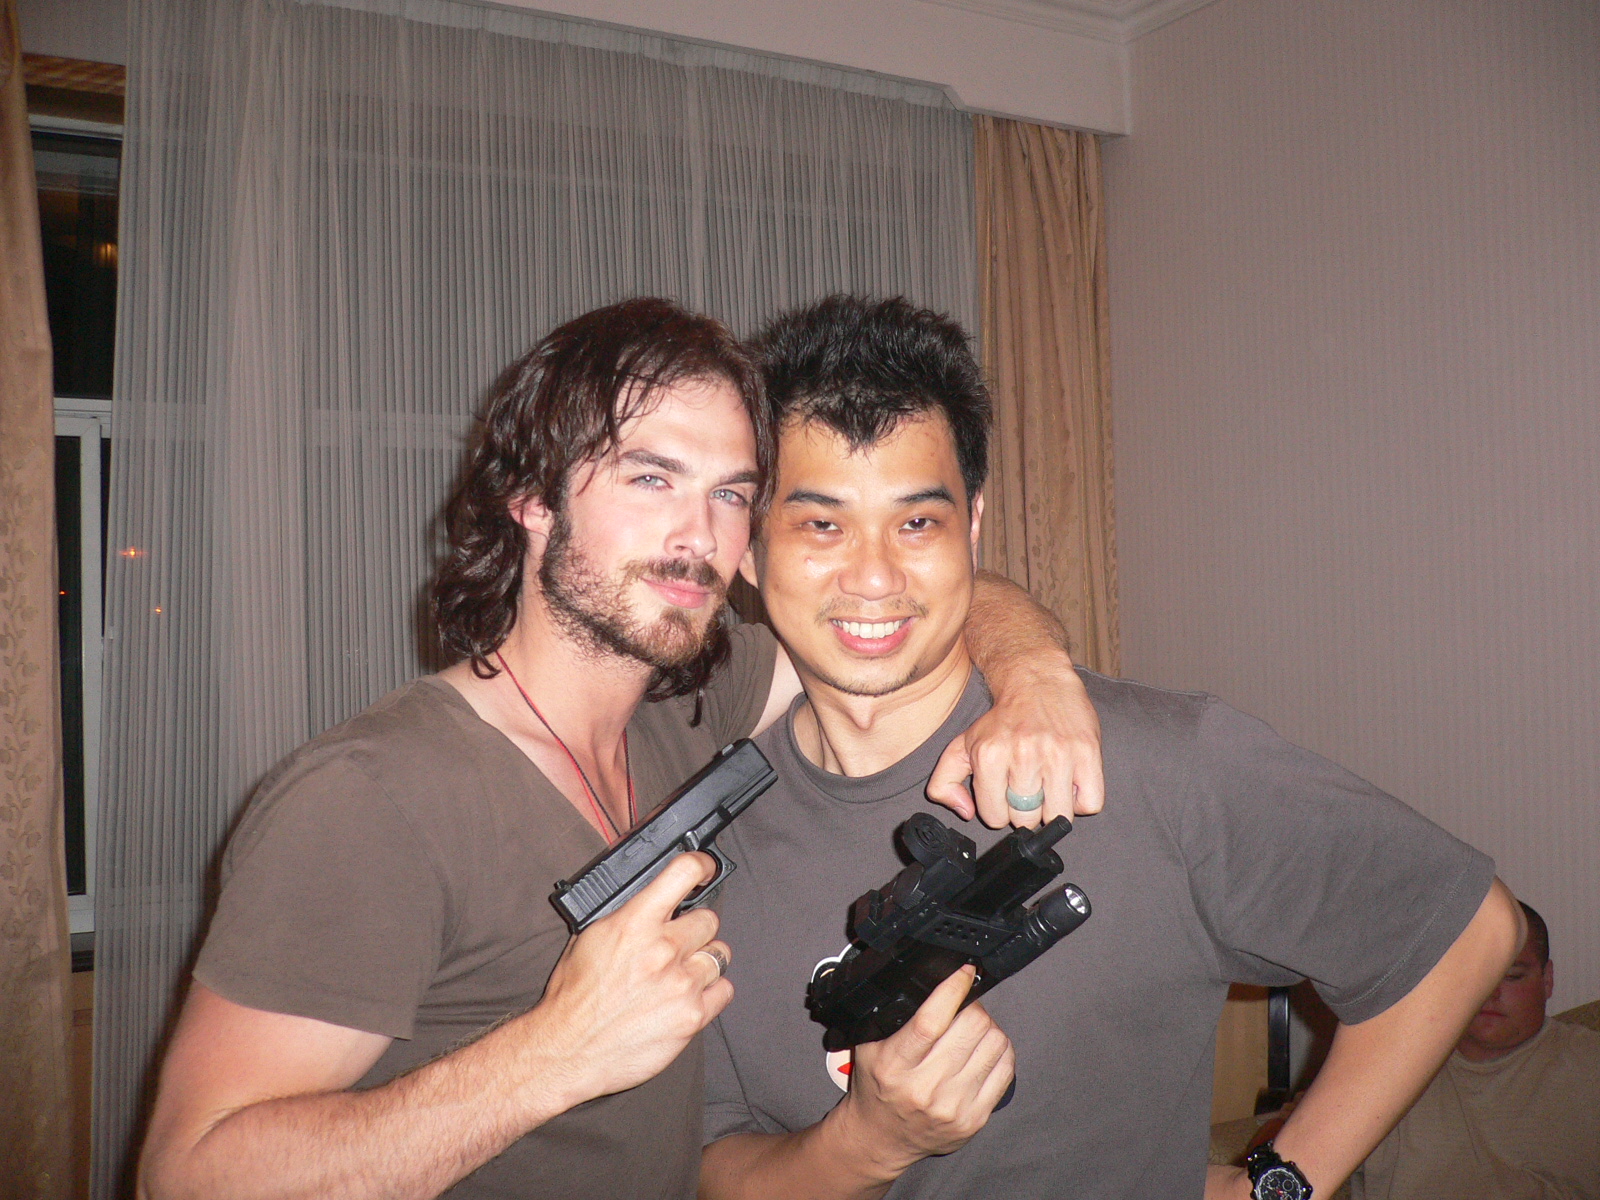 With Ian Somerhalder 2006